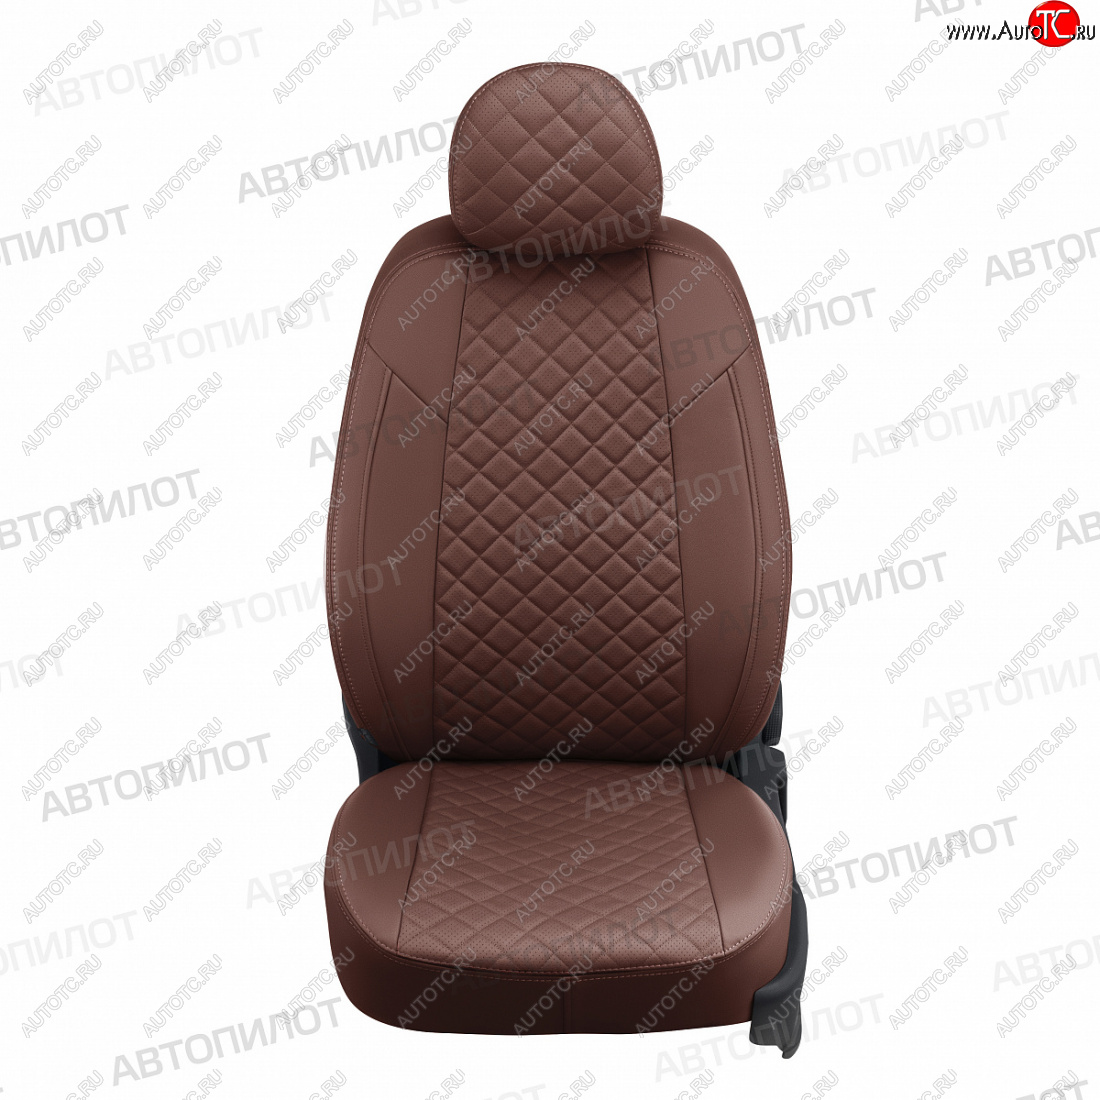 7 799 р. Чехлы сидений (экокожа) Автопилот Ромб  KIA Optima  3 TF (2010-2016) (темно-коричневый)